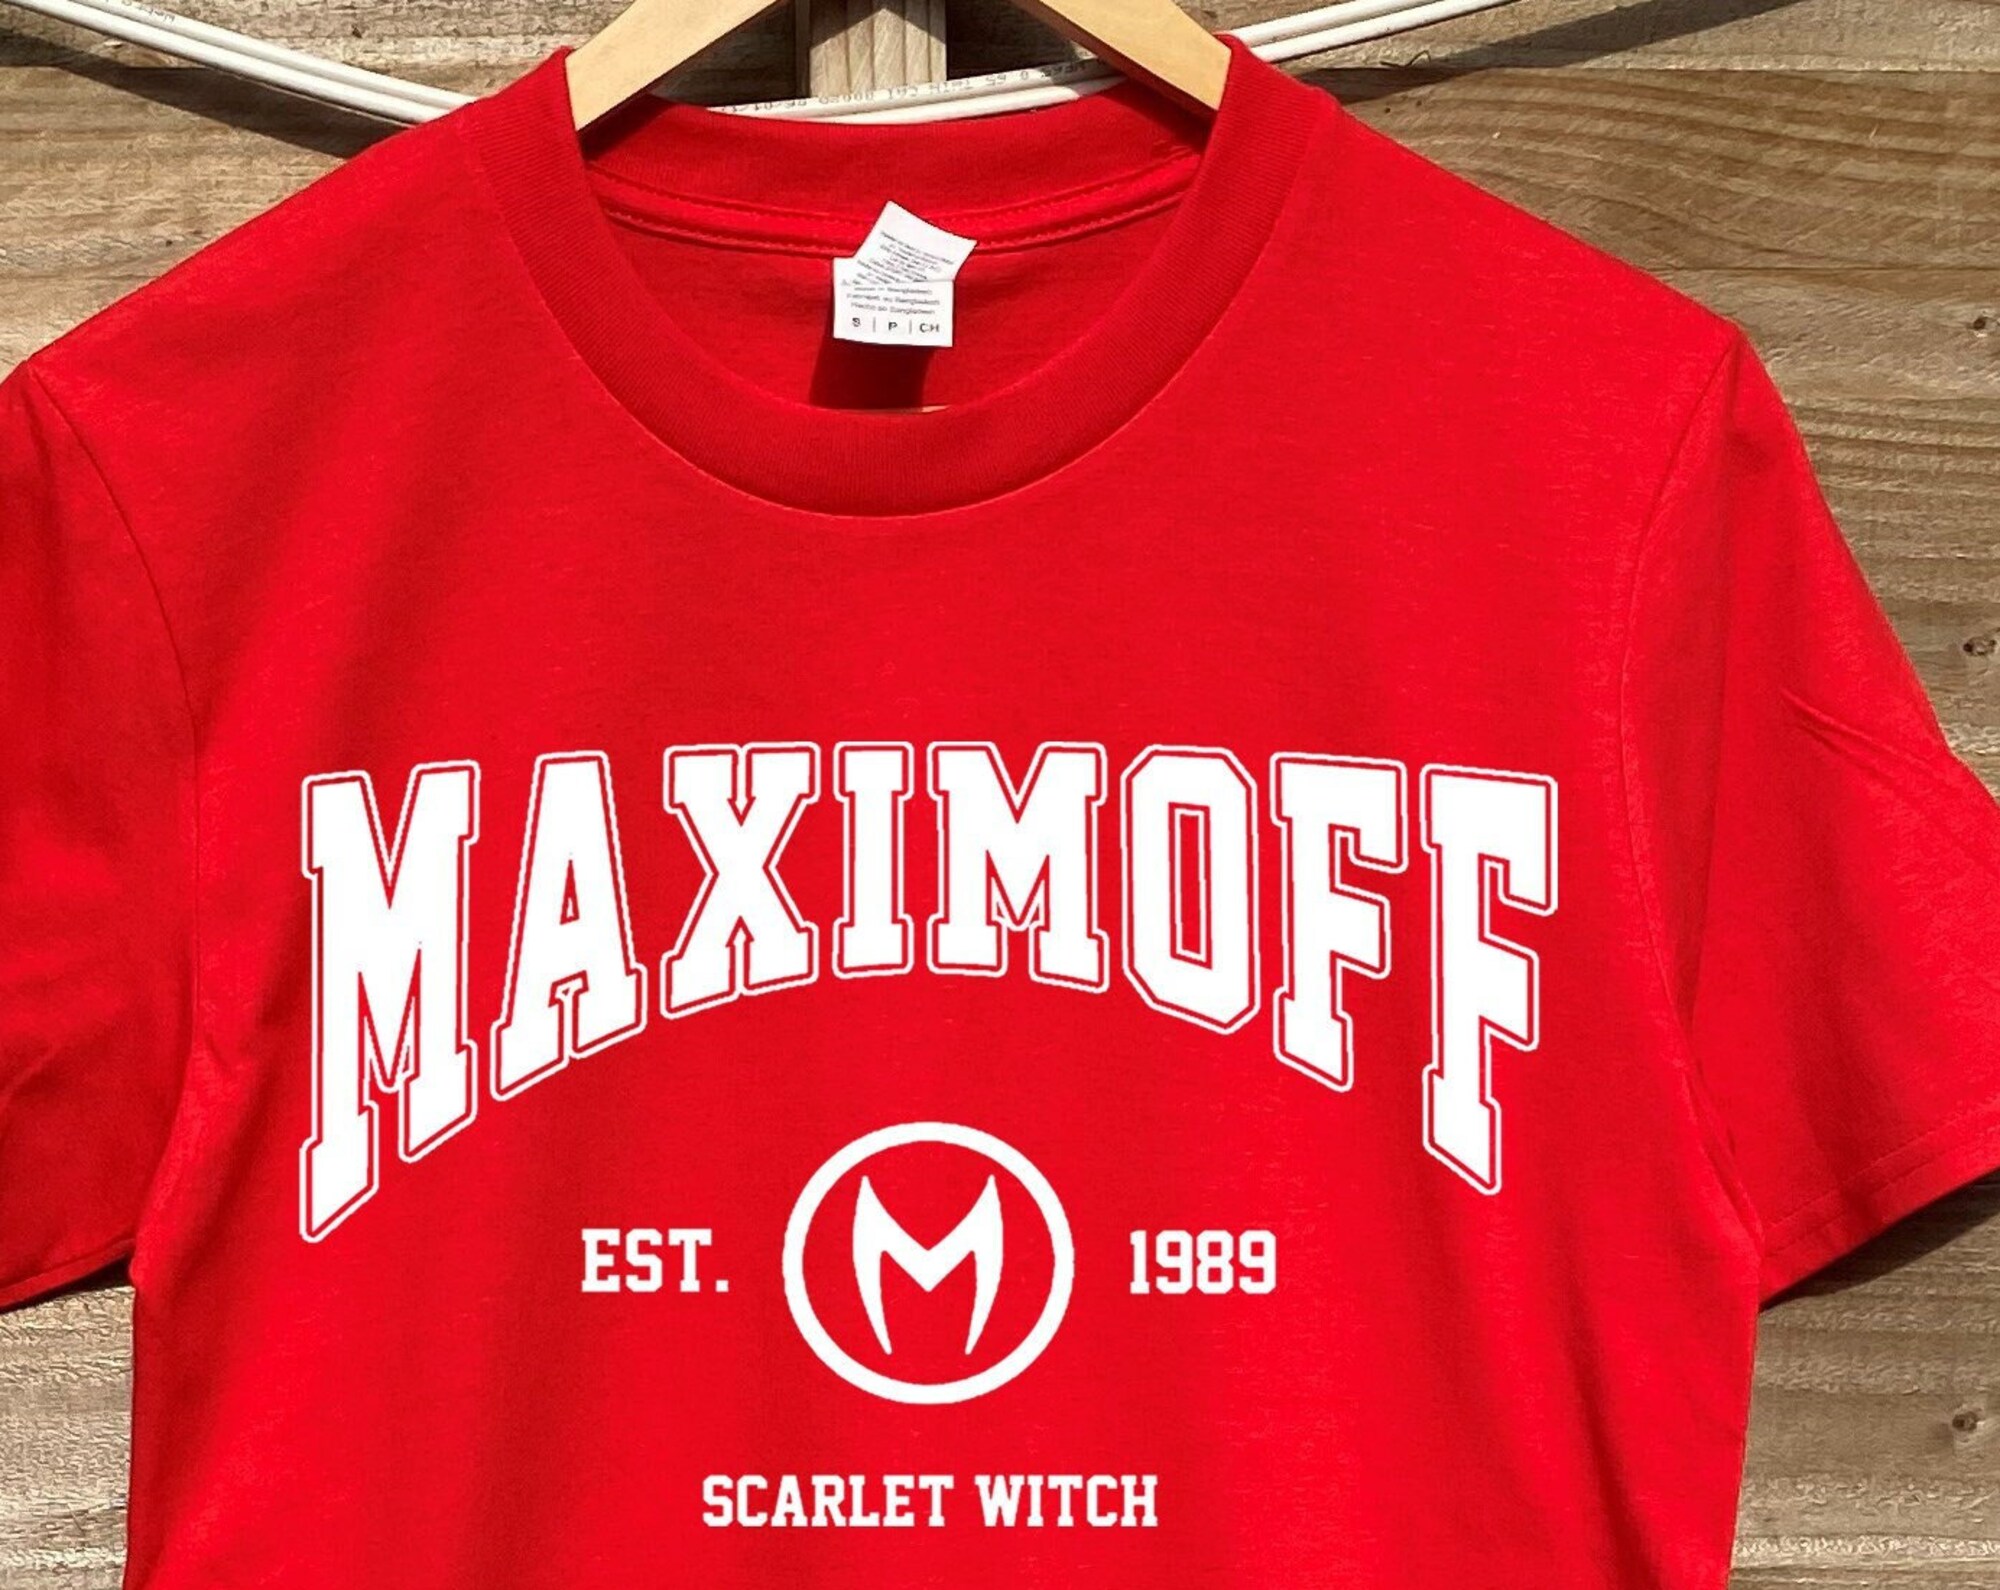 Maximoff EST. 1989 - adults unisex t-shirt